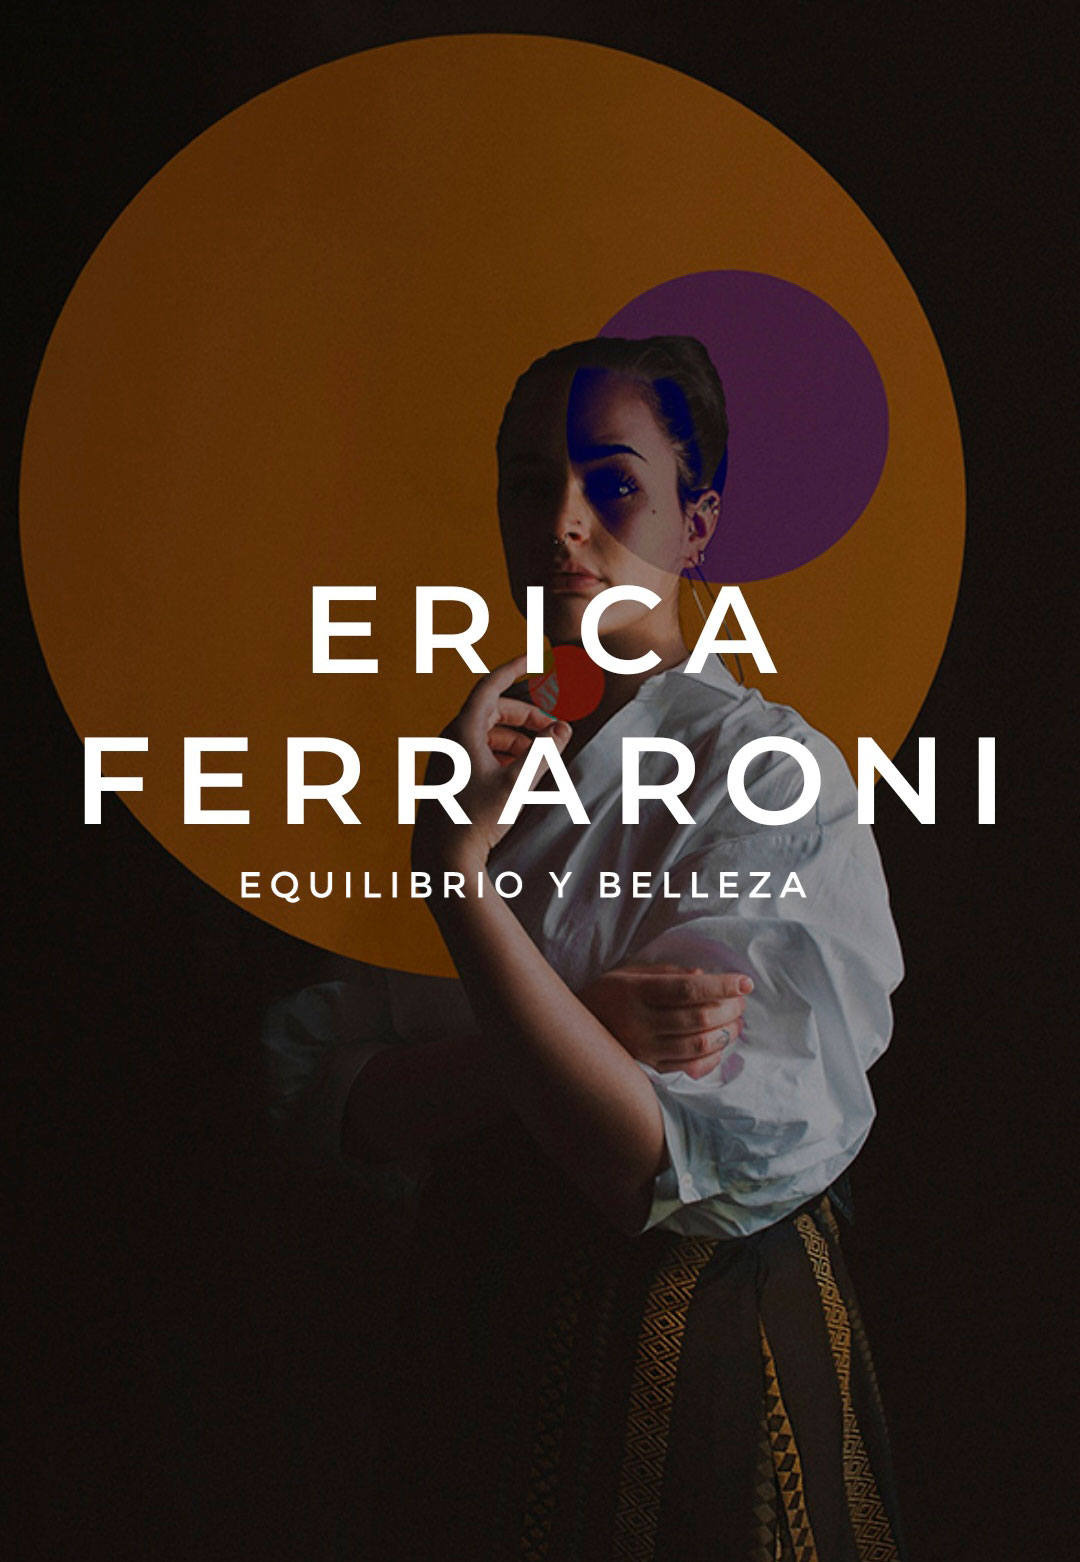 ERICA FERRARONI - Equilibrio y belleza